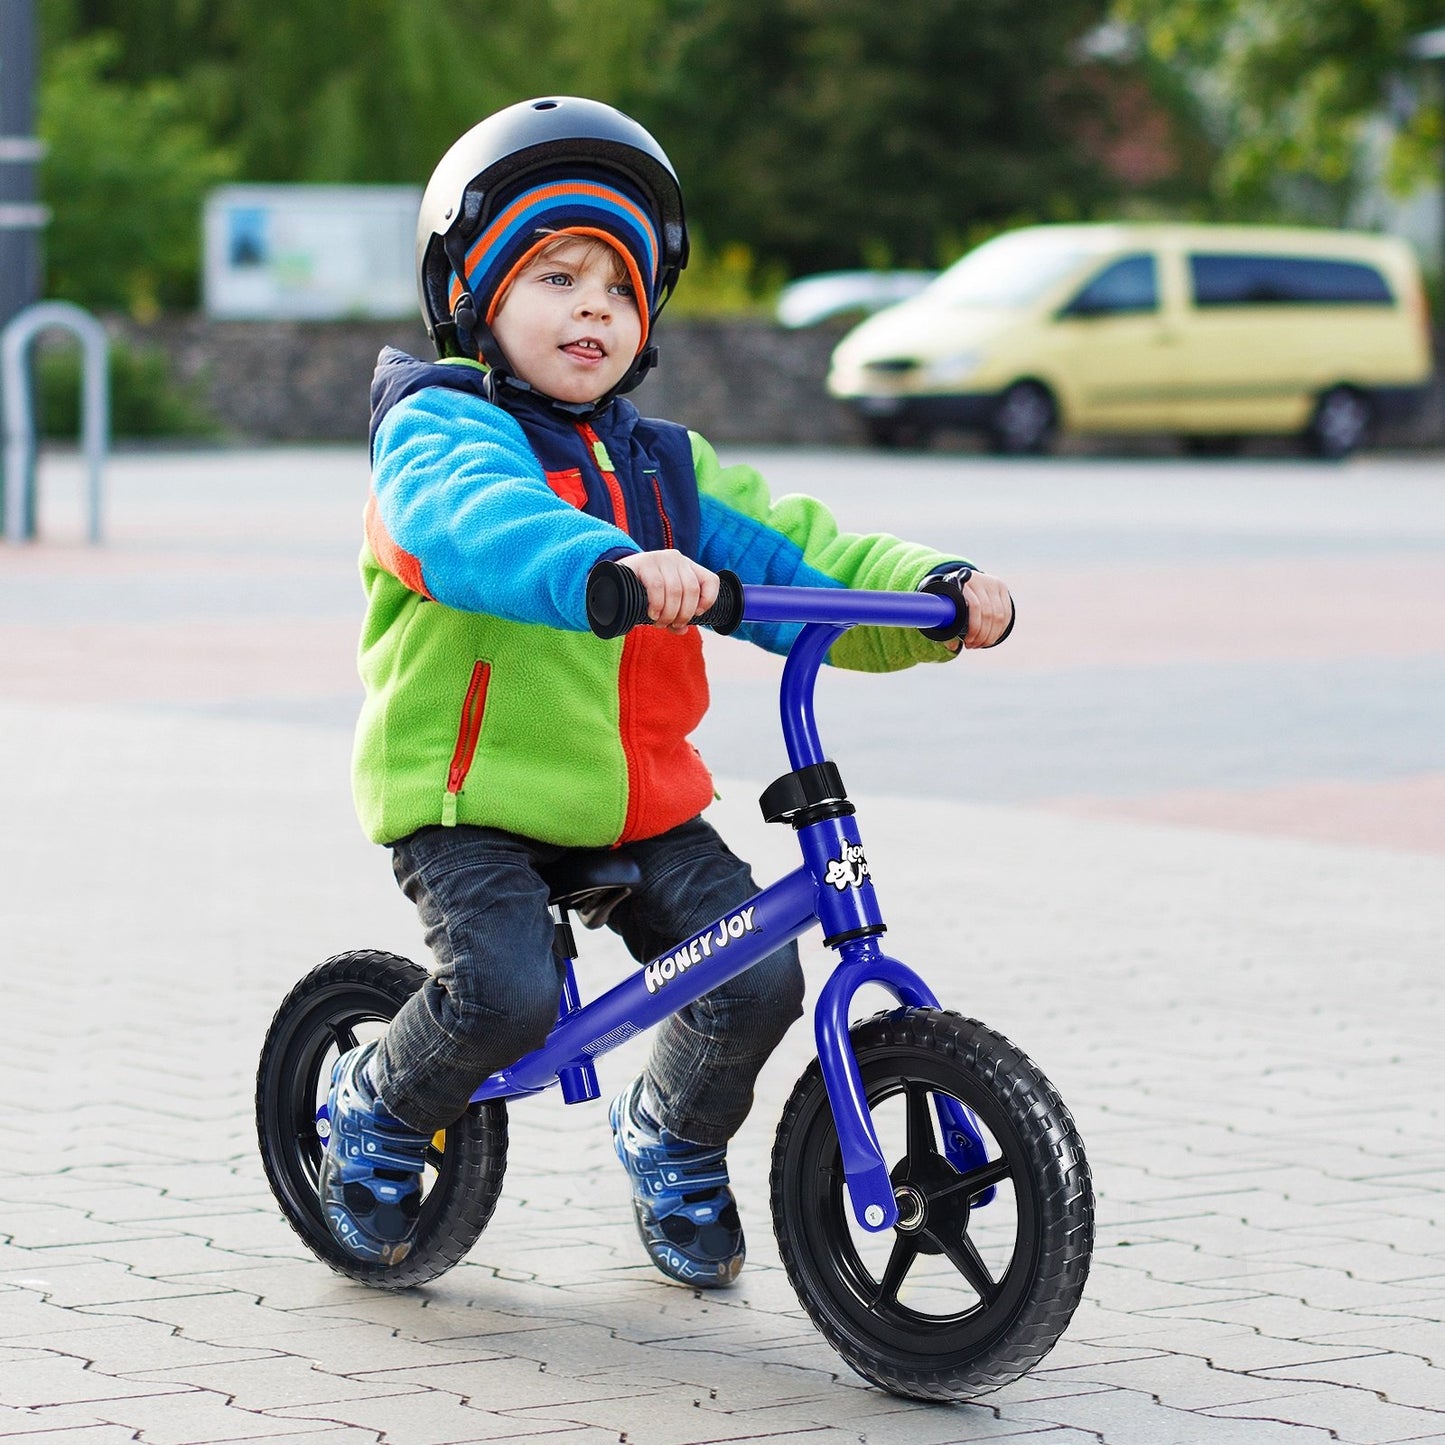 Kids No Pedal Balance Bike with Adjustable Handlebar and Seat, Blue